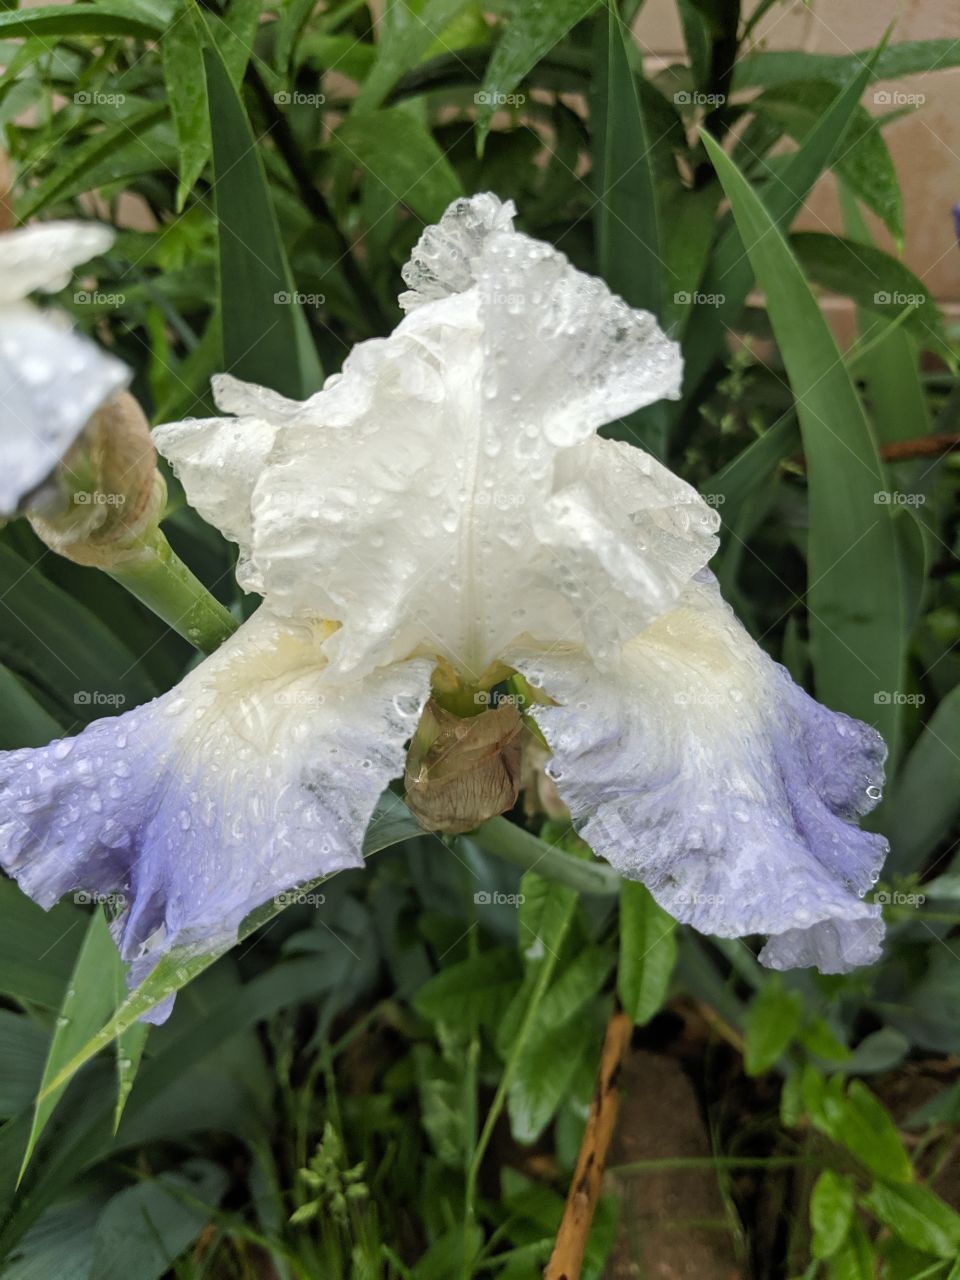 This Iris is dancing in the rain.